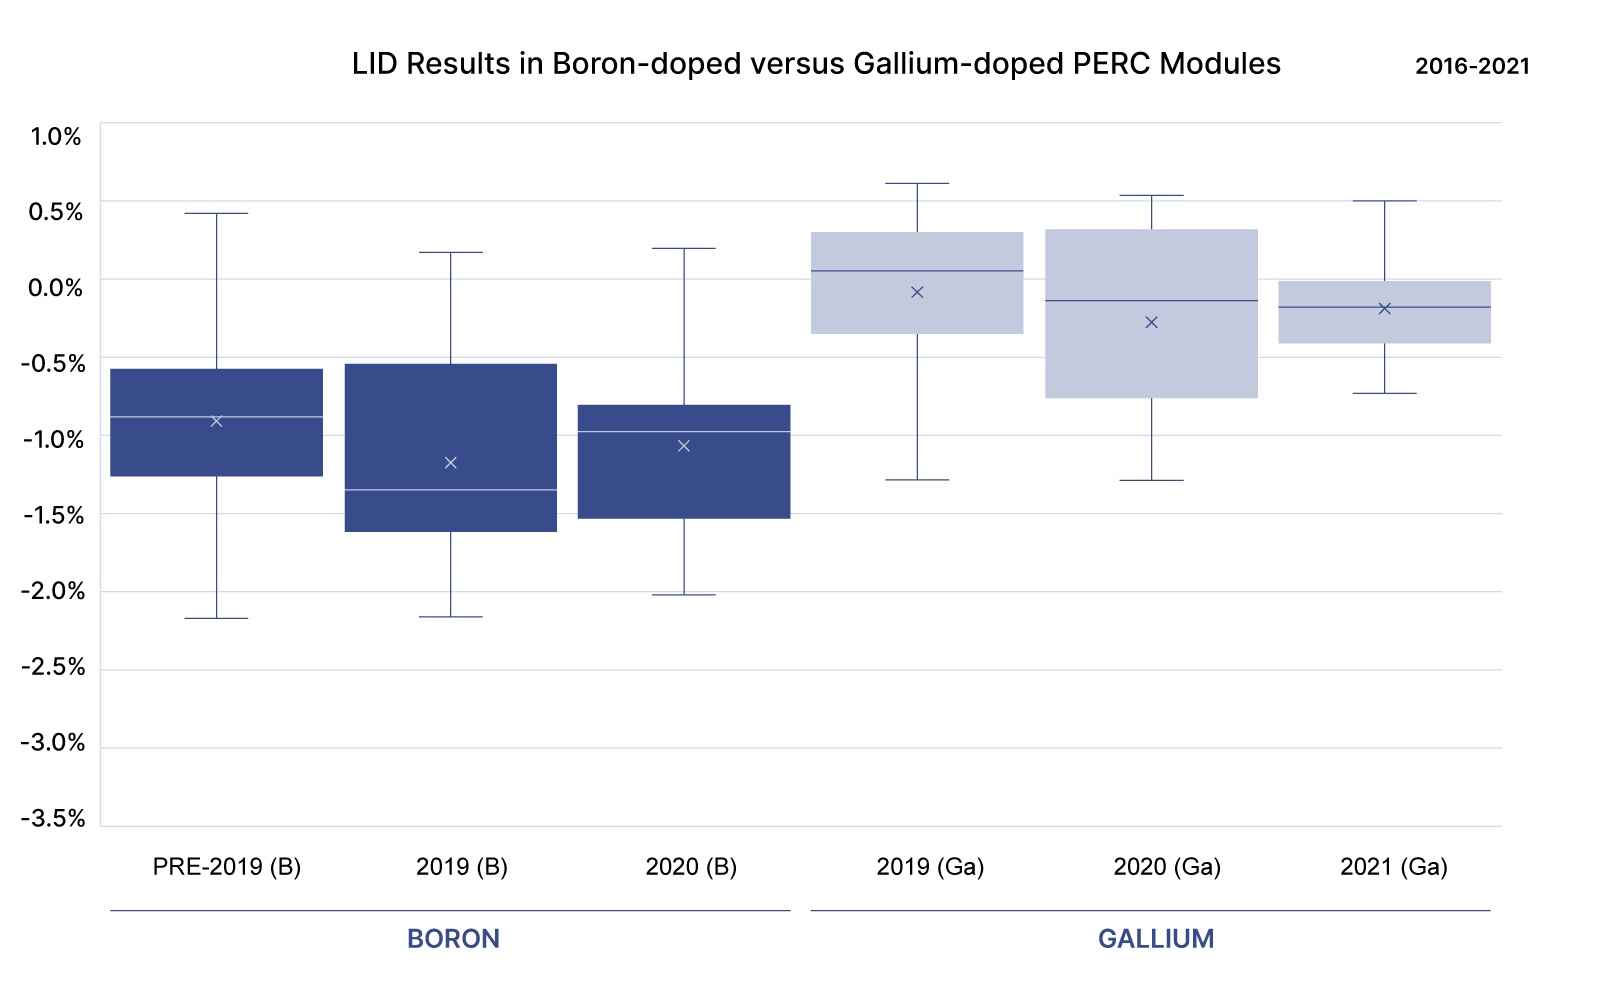 Data chart: LID results in boron-doped versus gallium-doped PERC modules